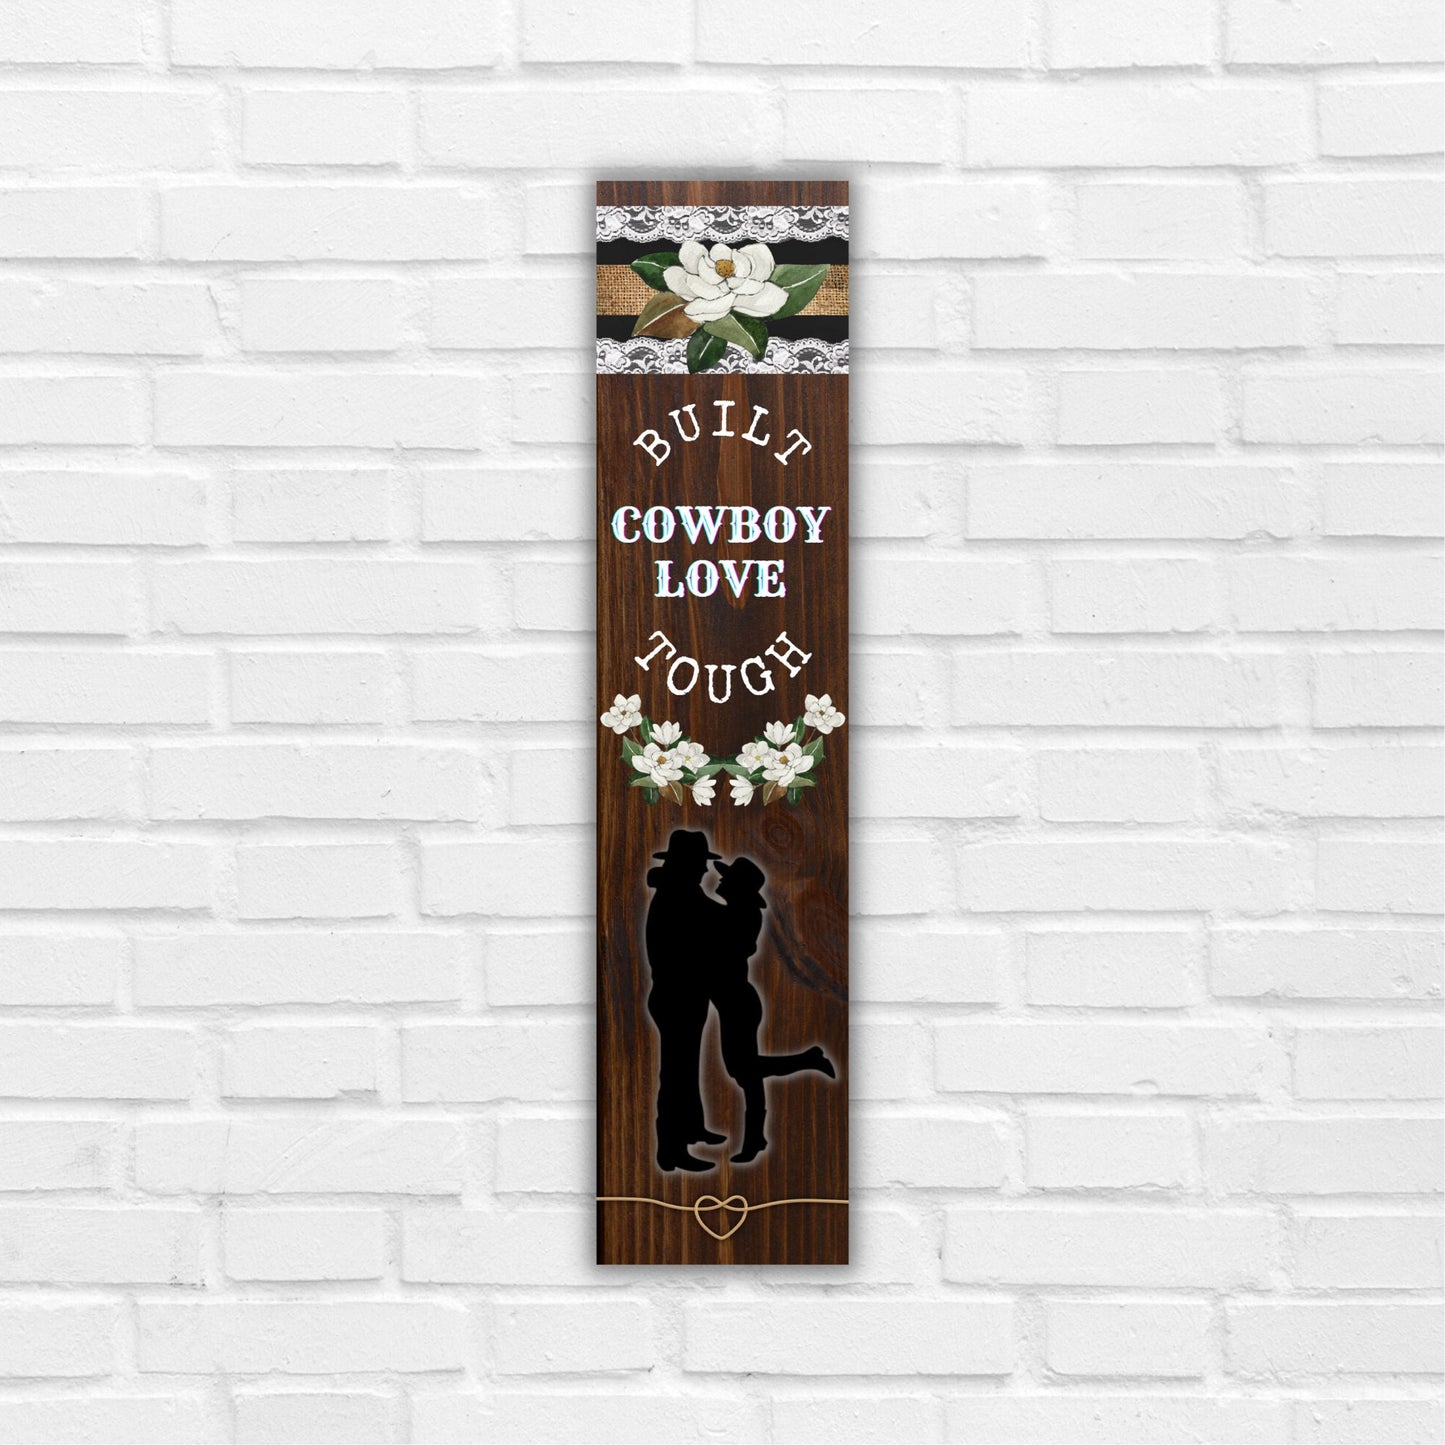 24 Inch (2 Foot Tall) Built Cowboy Love Tough Vertical Wood Print Sign Door Hanger Porch Sign